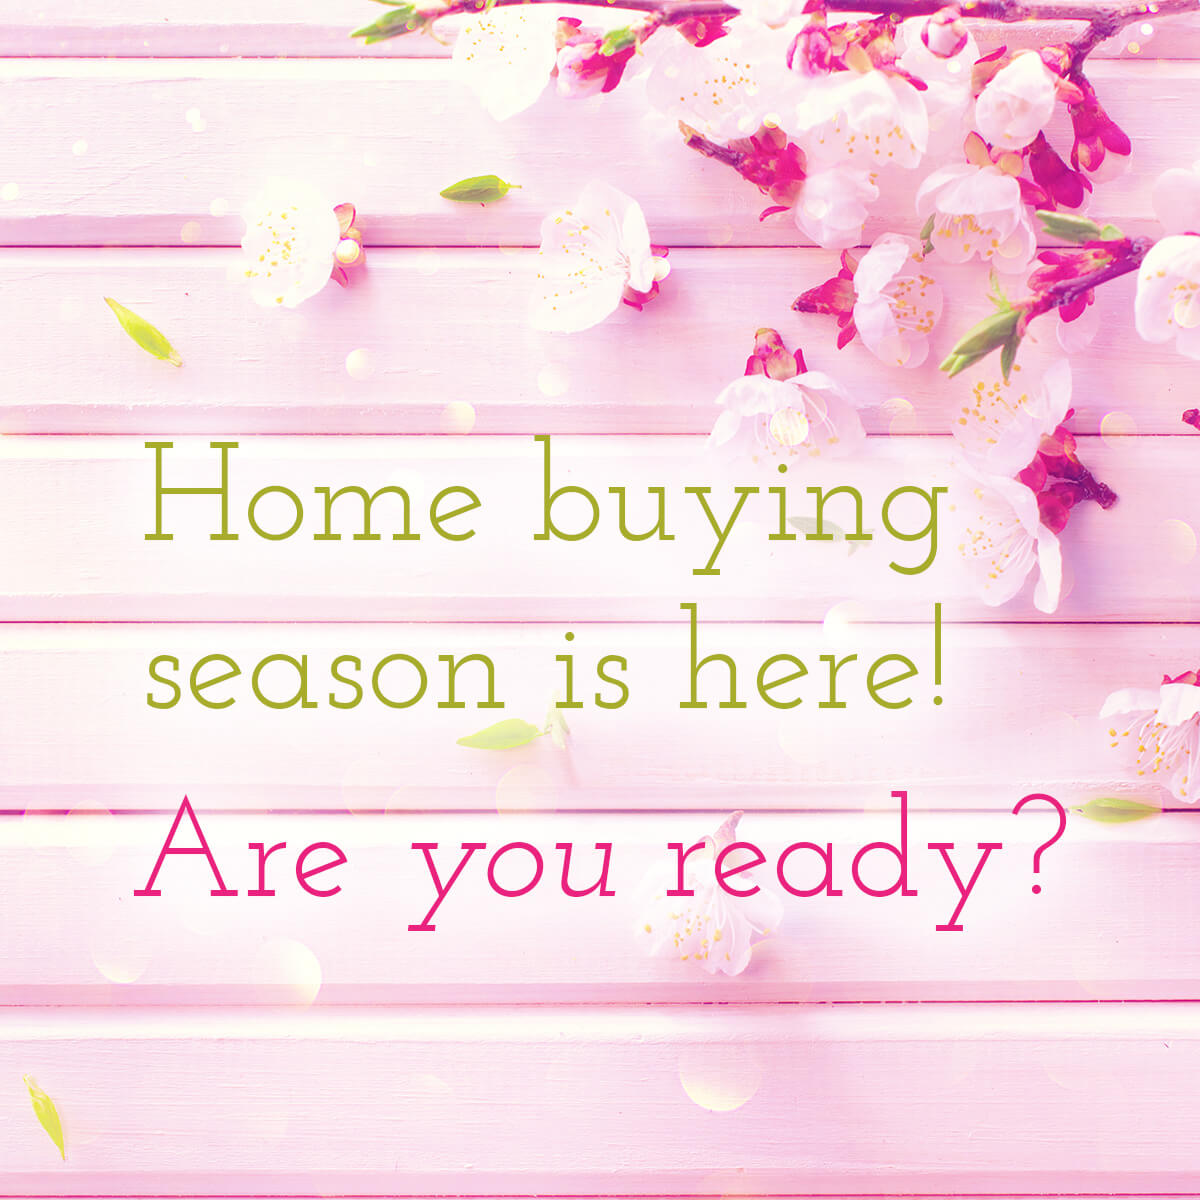 home buying season is here!